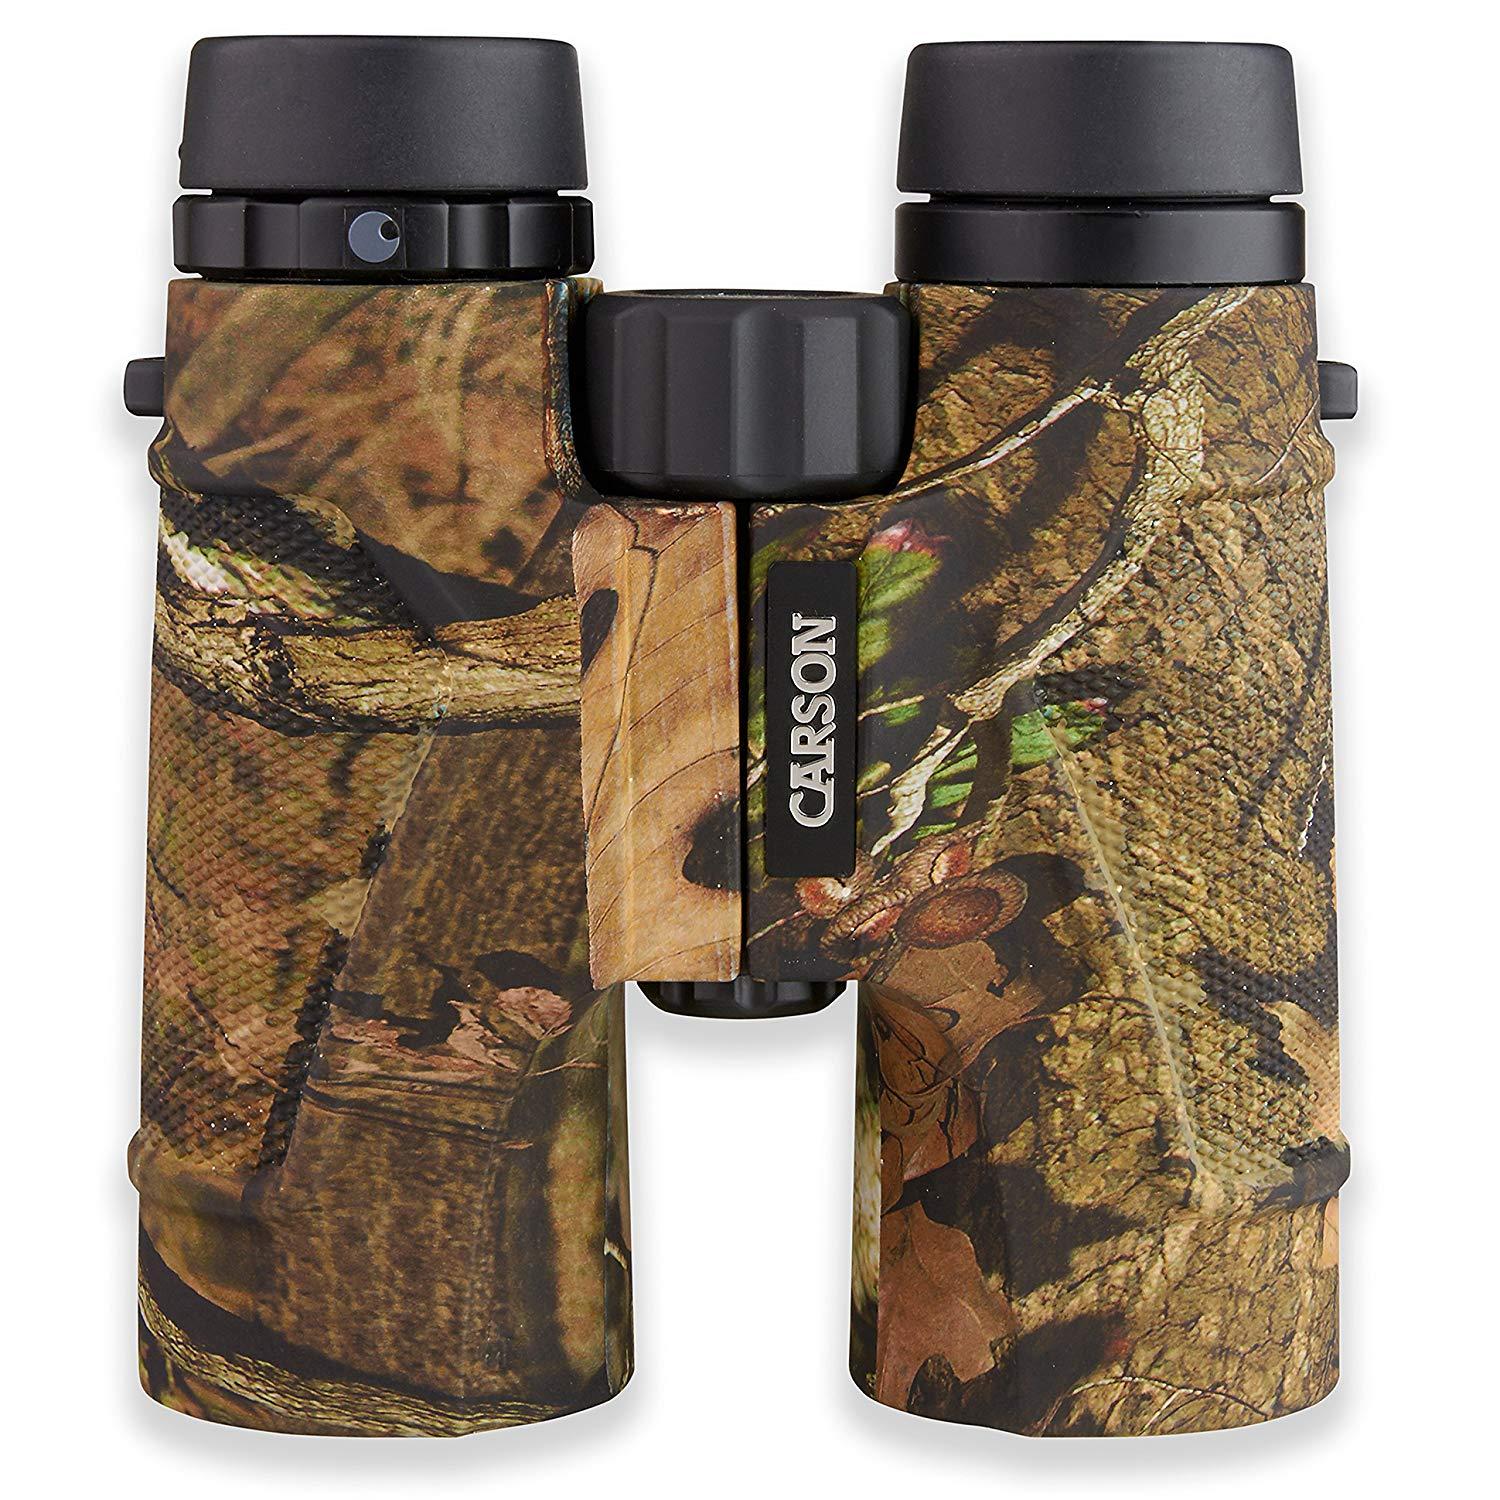 Carson 3D Series High Definition Waterproof Binoculars